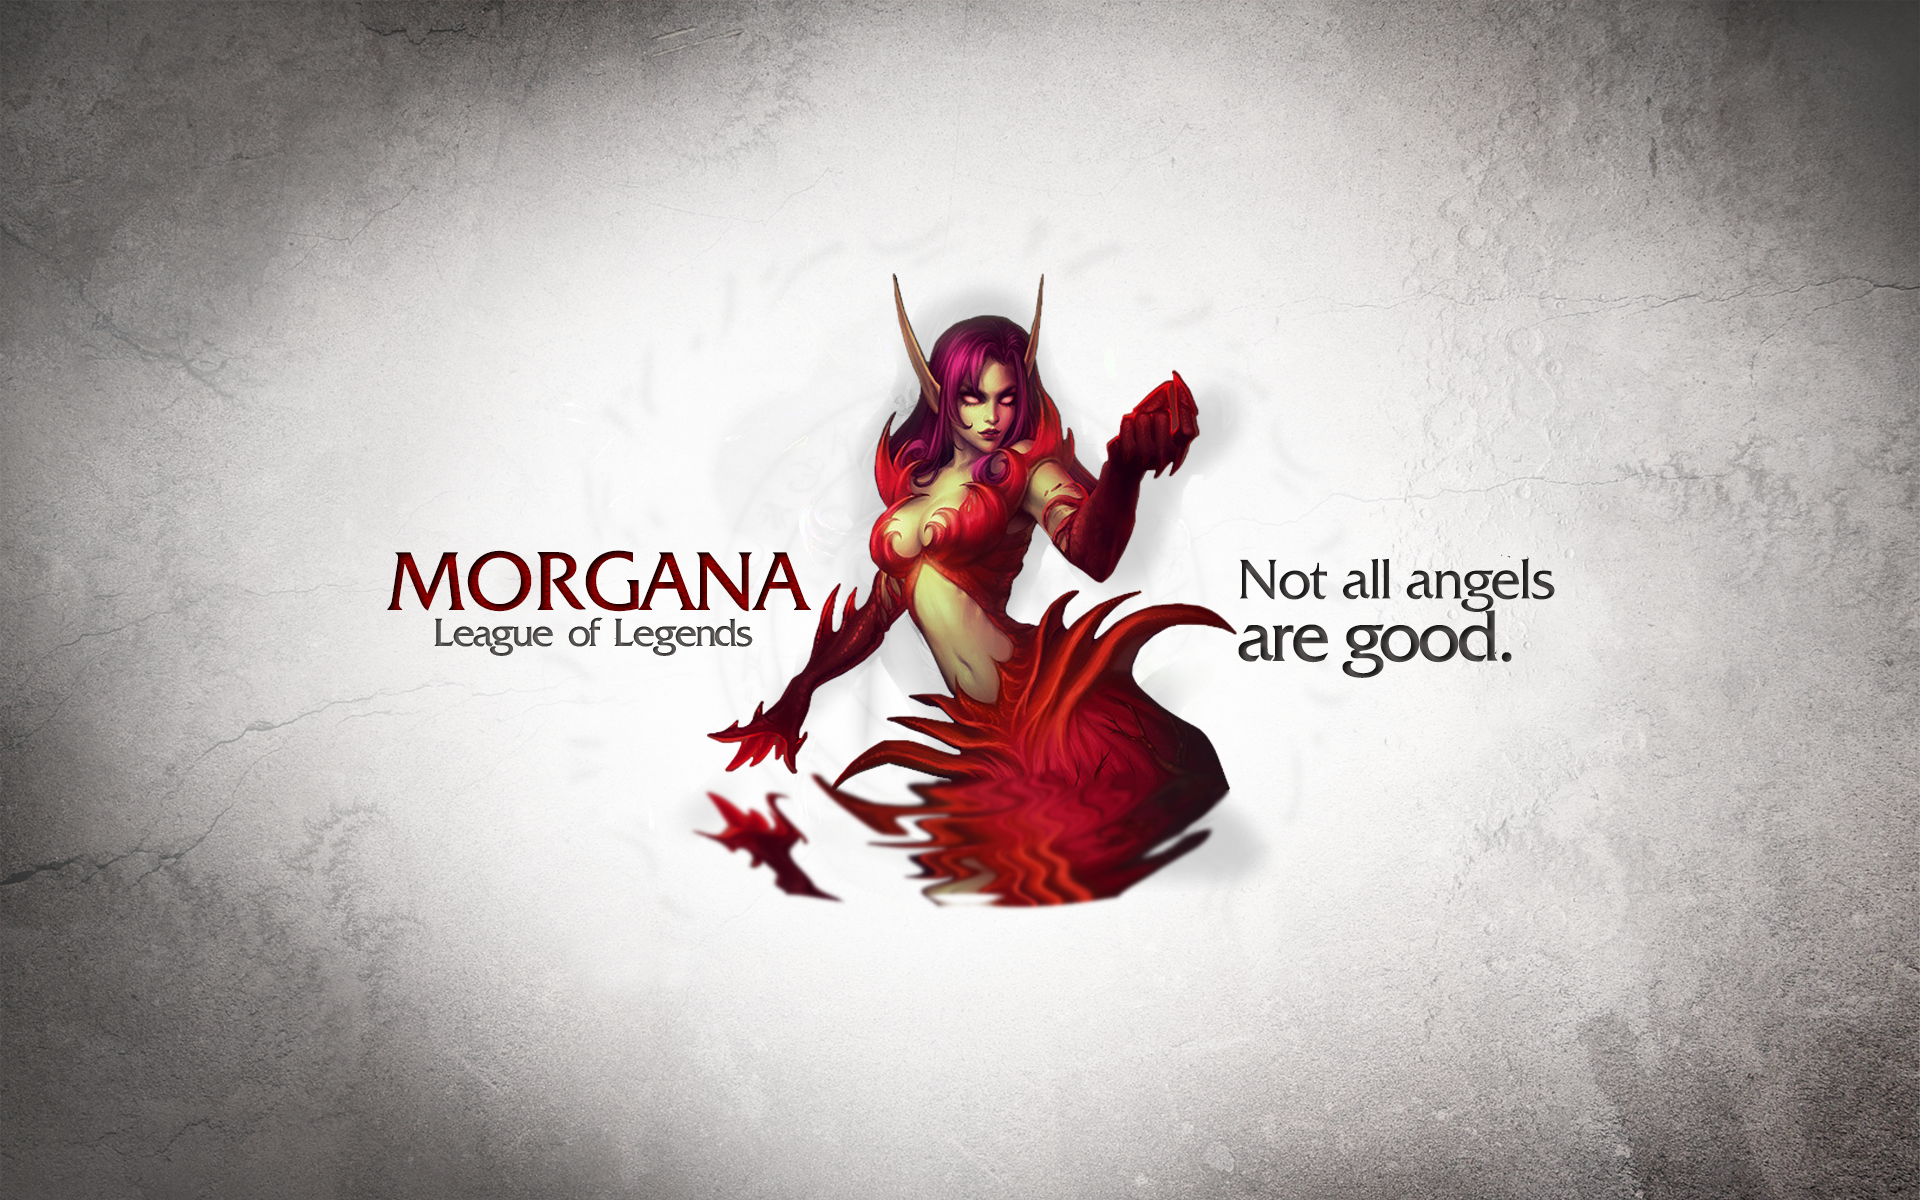 League of Legends Wallpaper - Morgana by SevionFX on DeviantArt